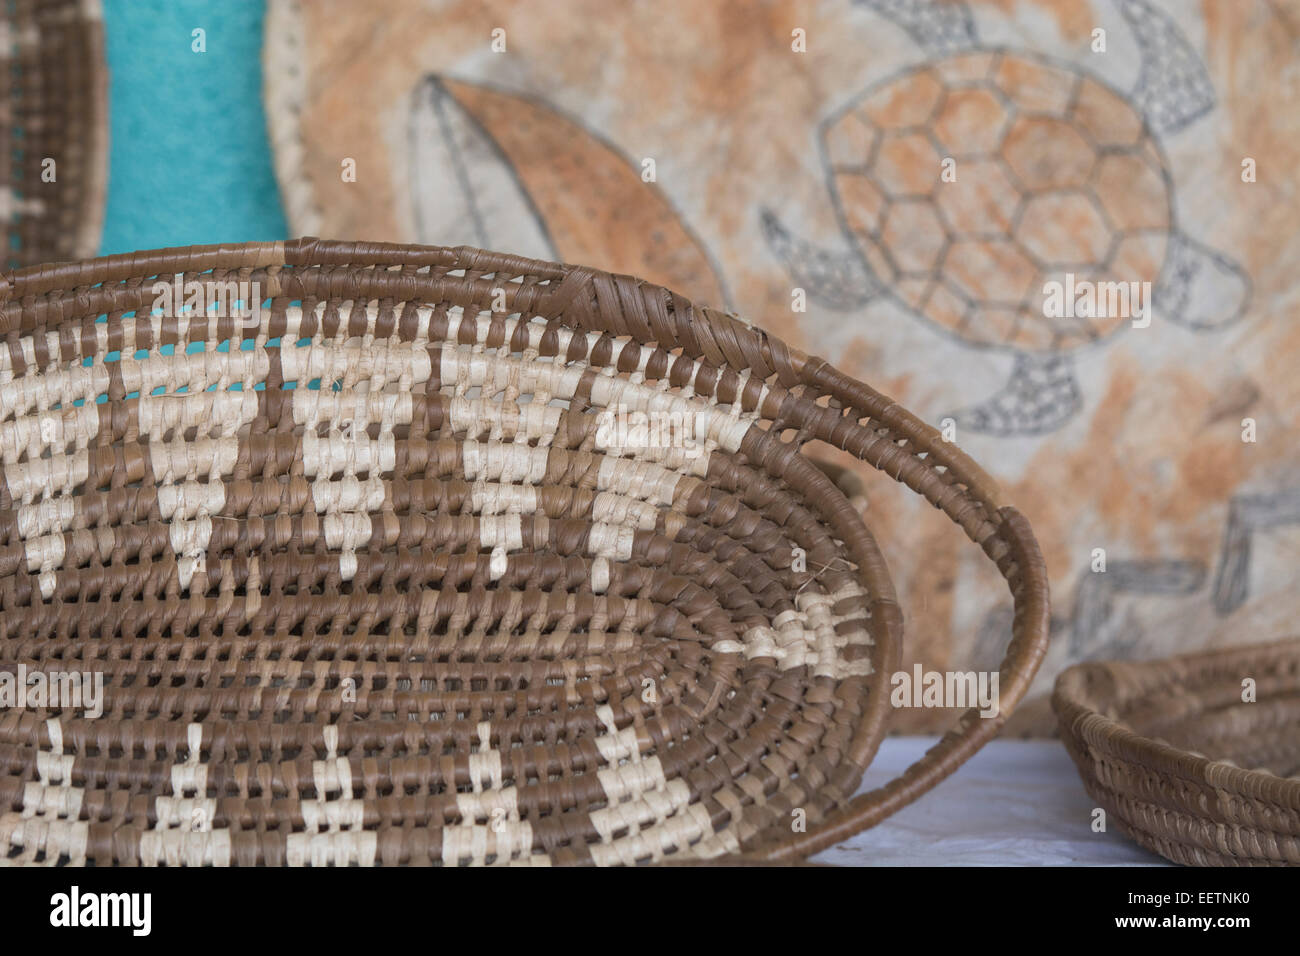 Kingdom of Tonga, Vava'u Islands, Neiafu. Hand woven souvenir baskets. Stock Photo